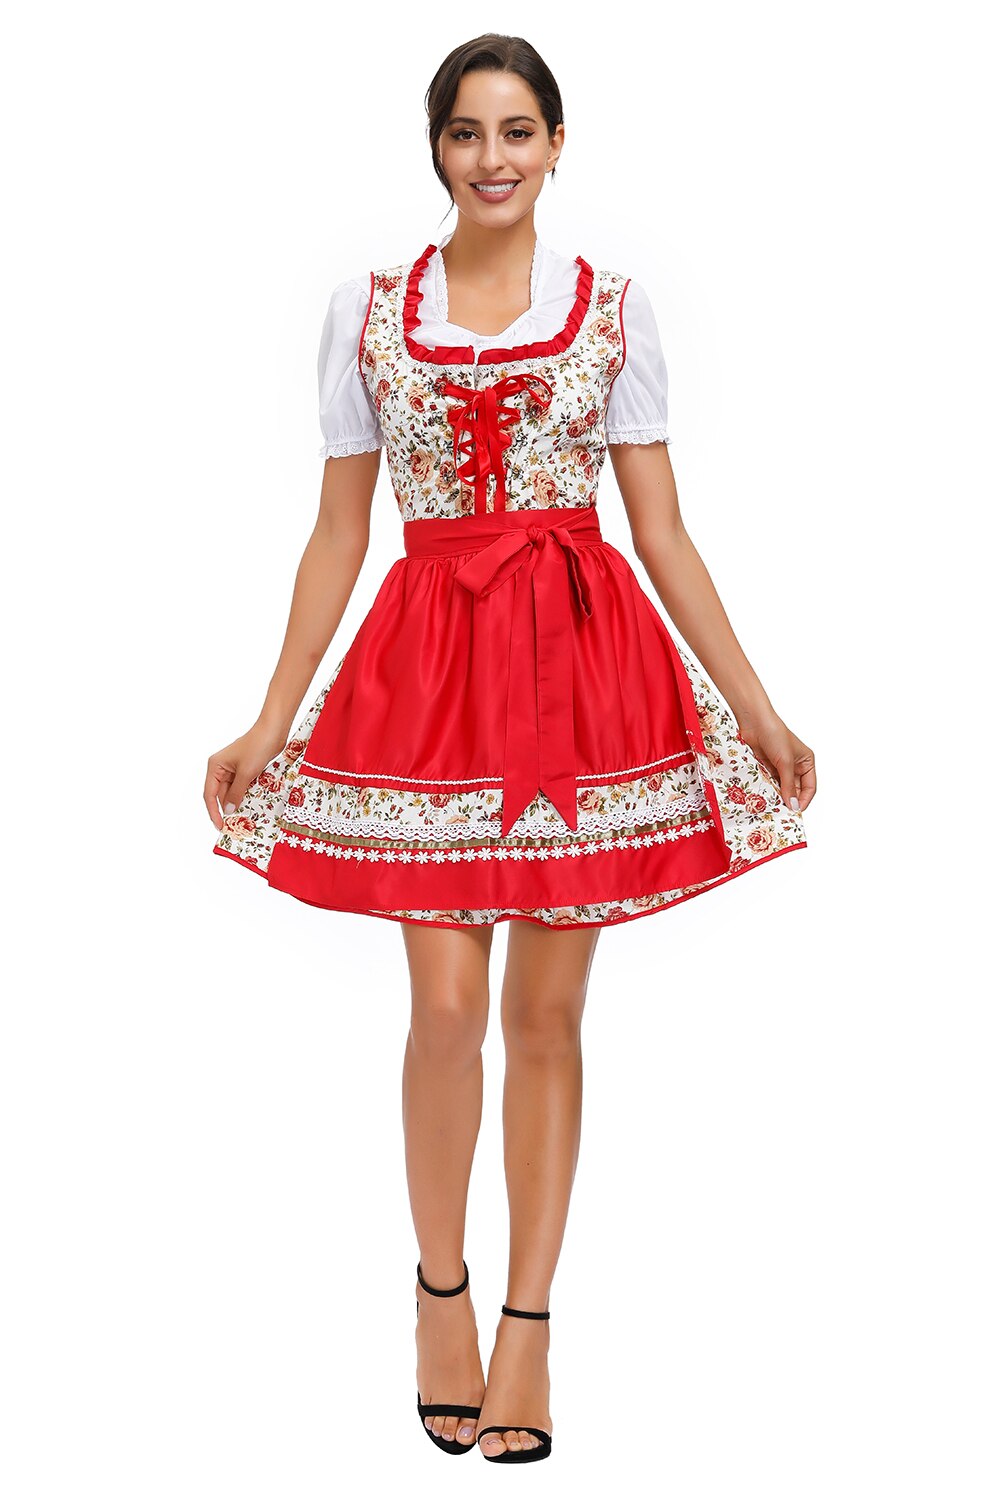 Women German Oktoberfest Costumes Barmaid Beer Girl Dirndl Dress Cosplay Carnival Party Fancy Dress